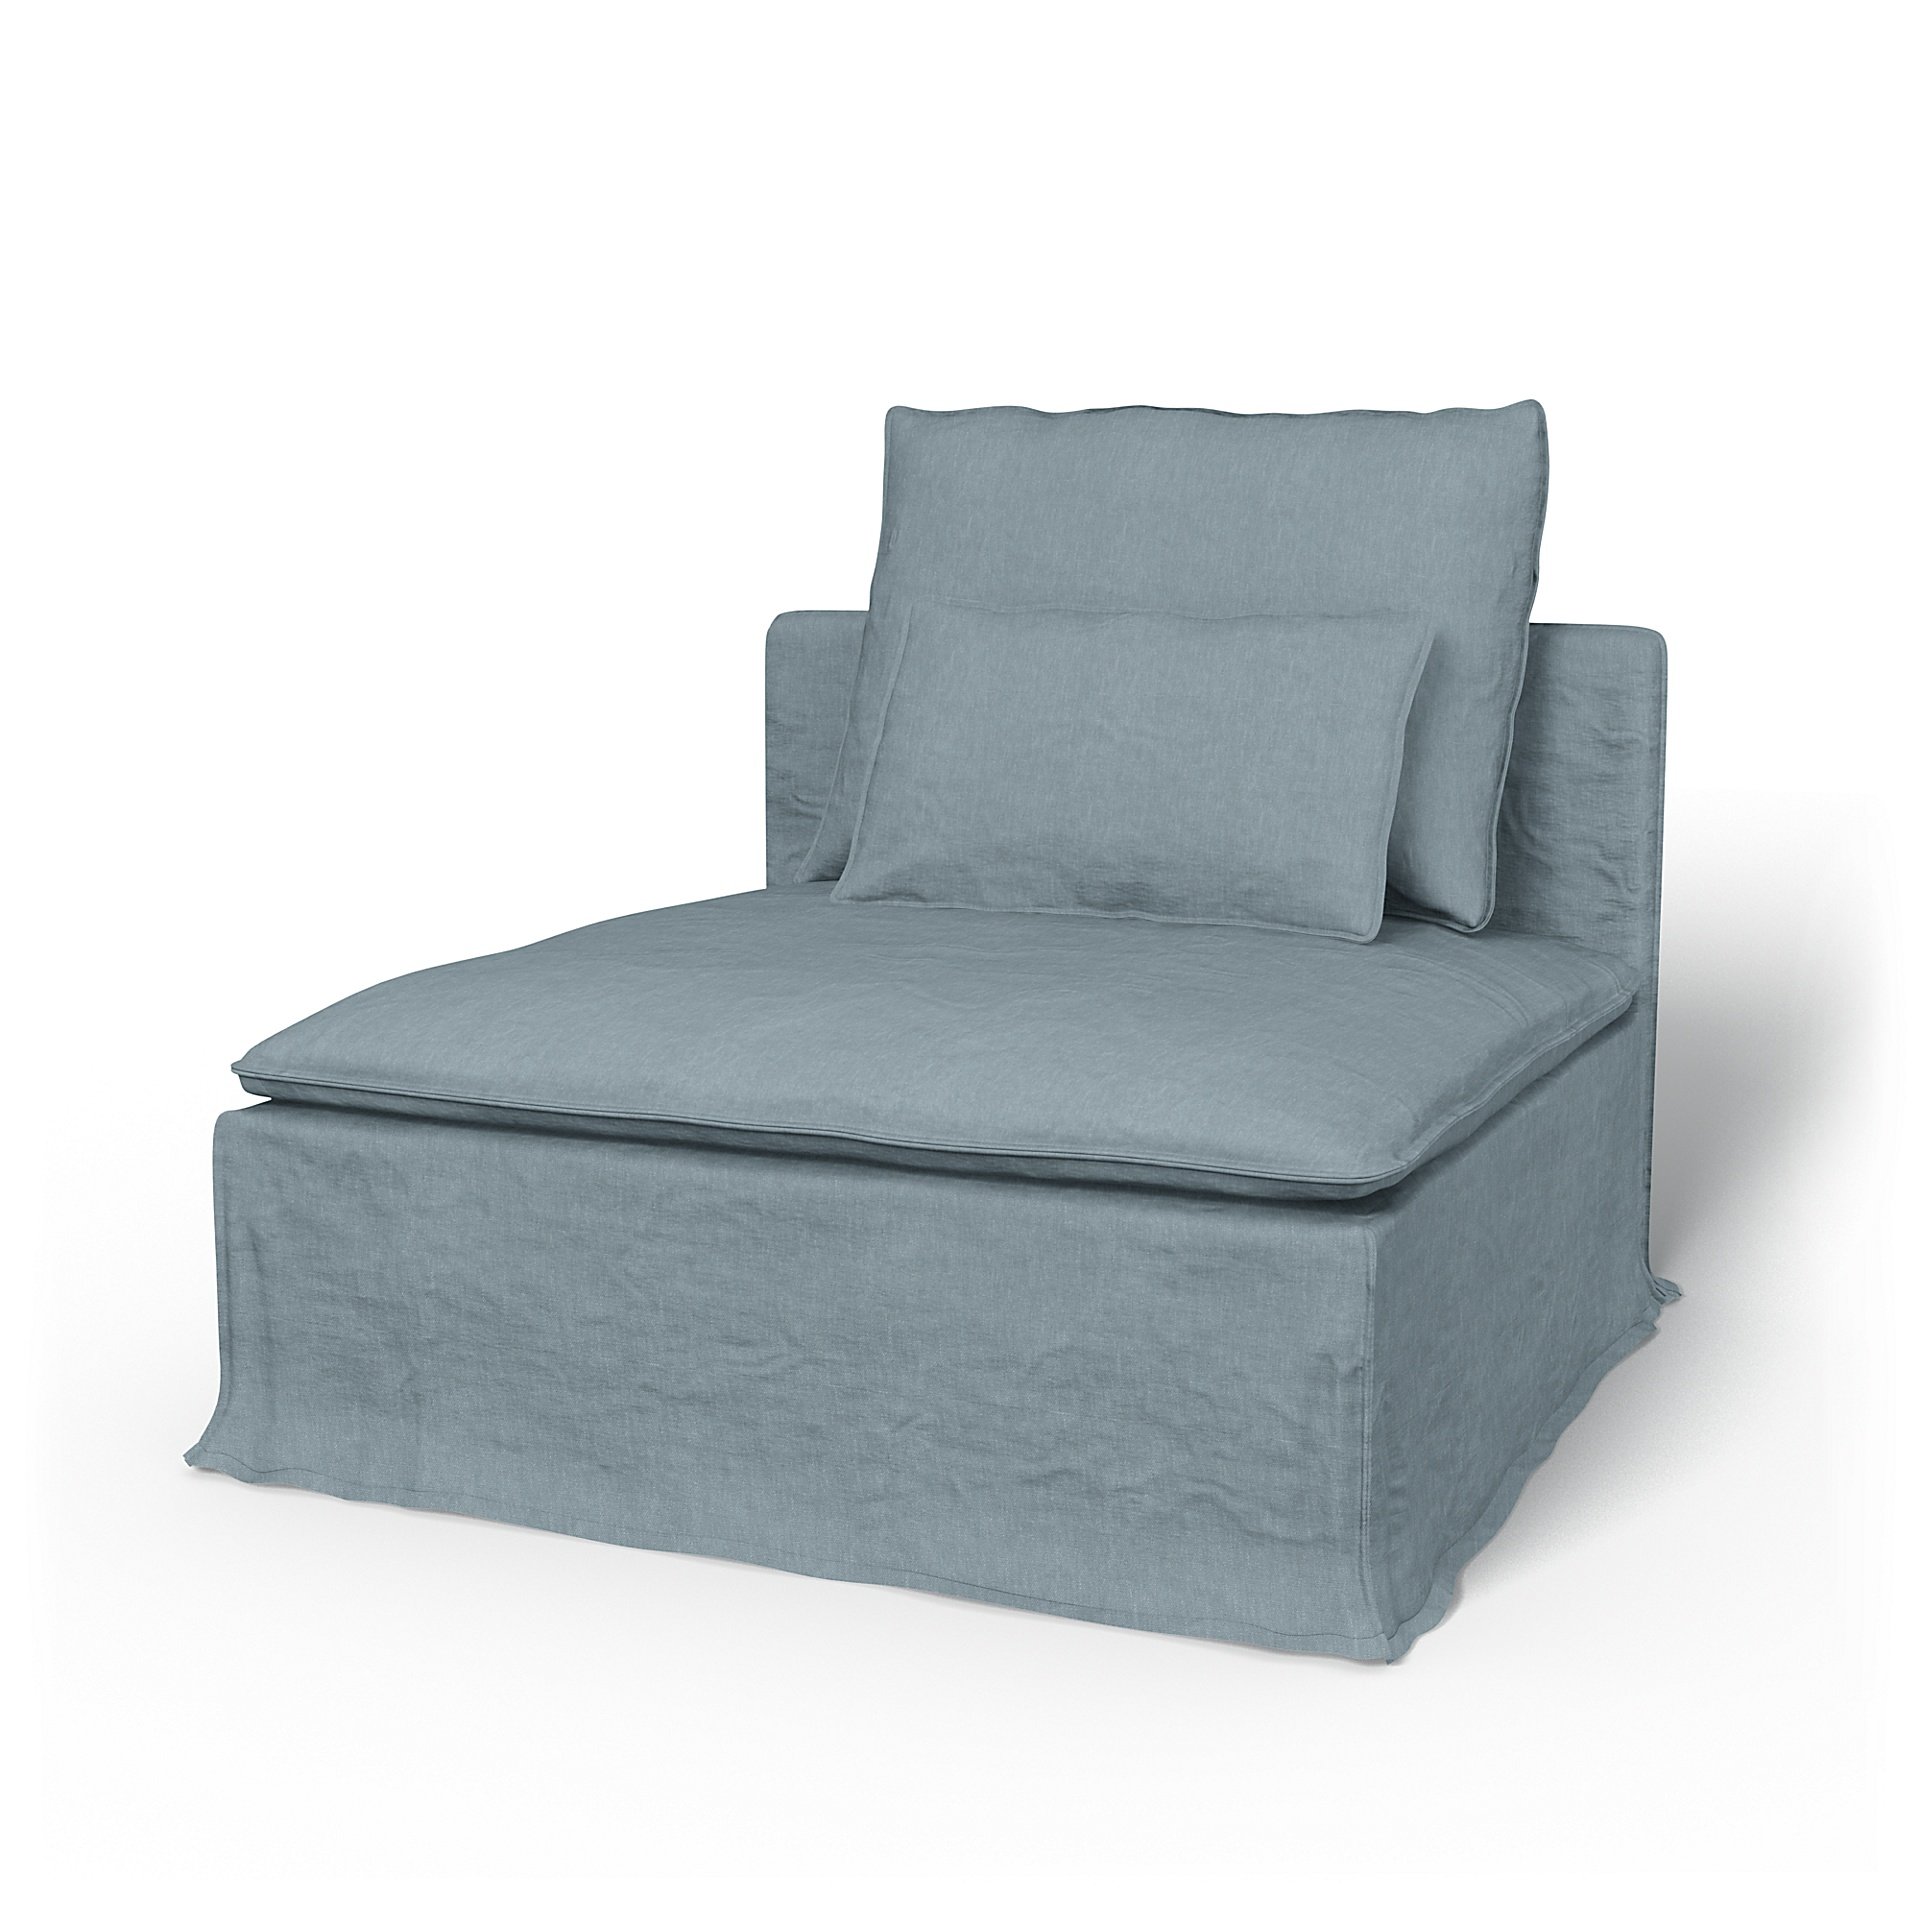 IKEA - Soderhamn 1 Seat Section Cover, Dusty Blue, Linen - Bemz